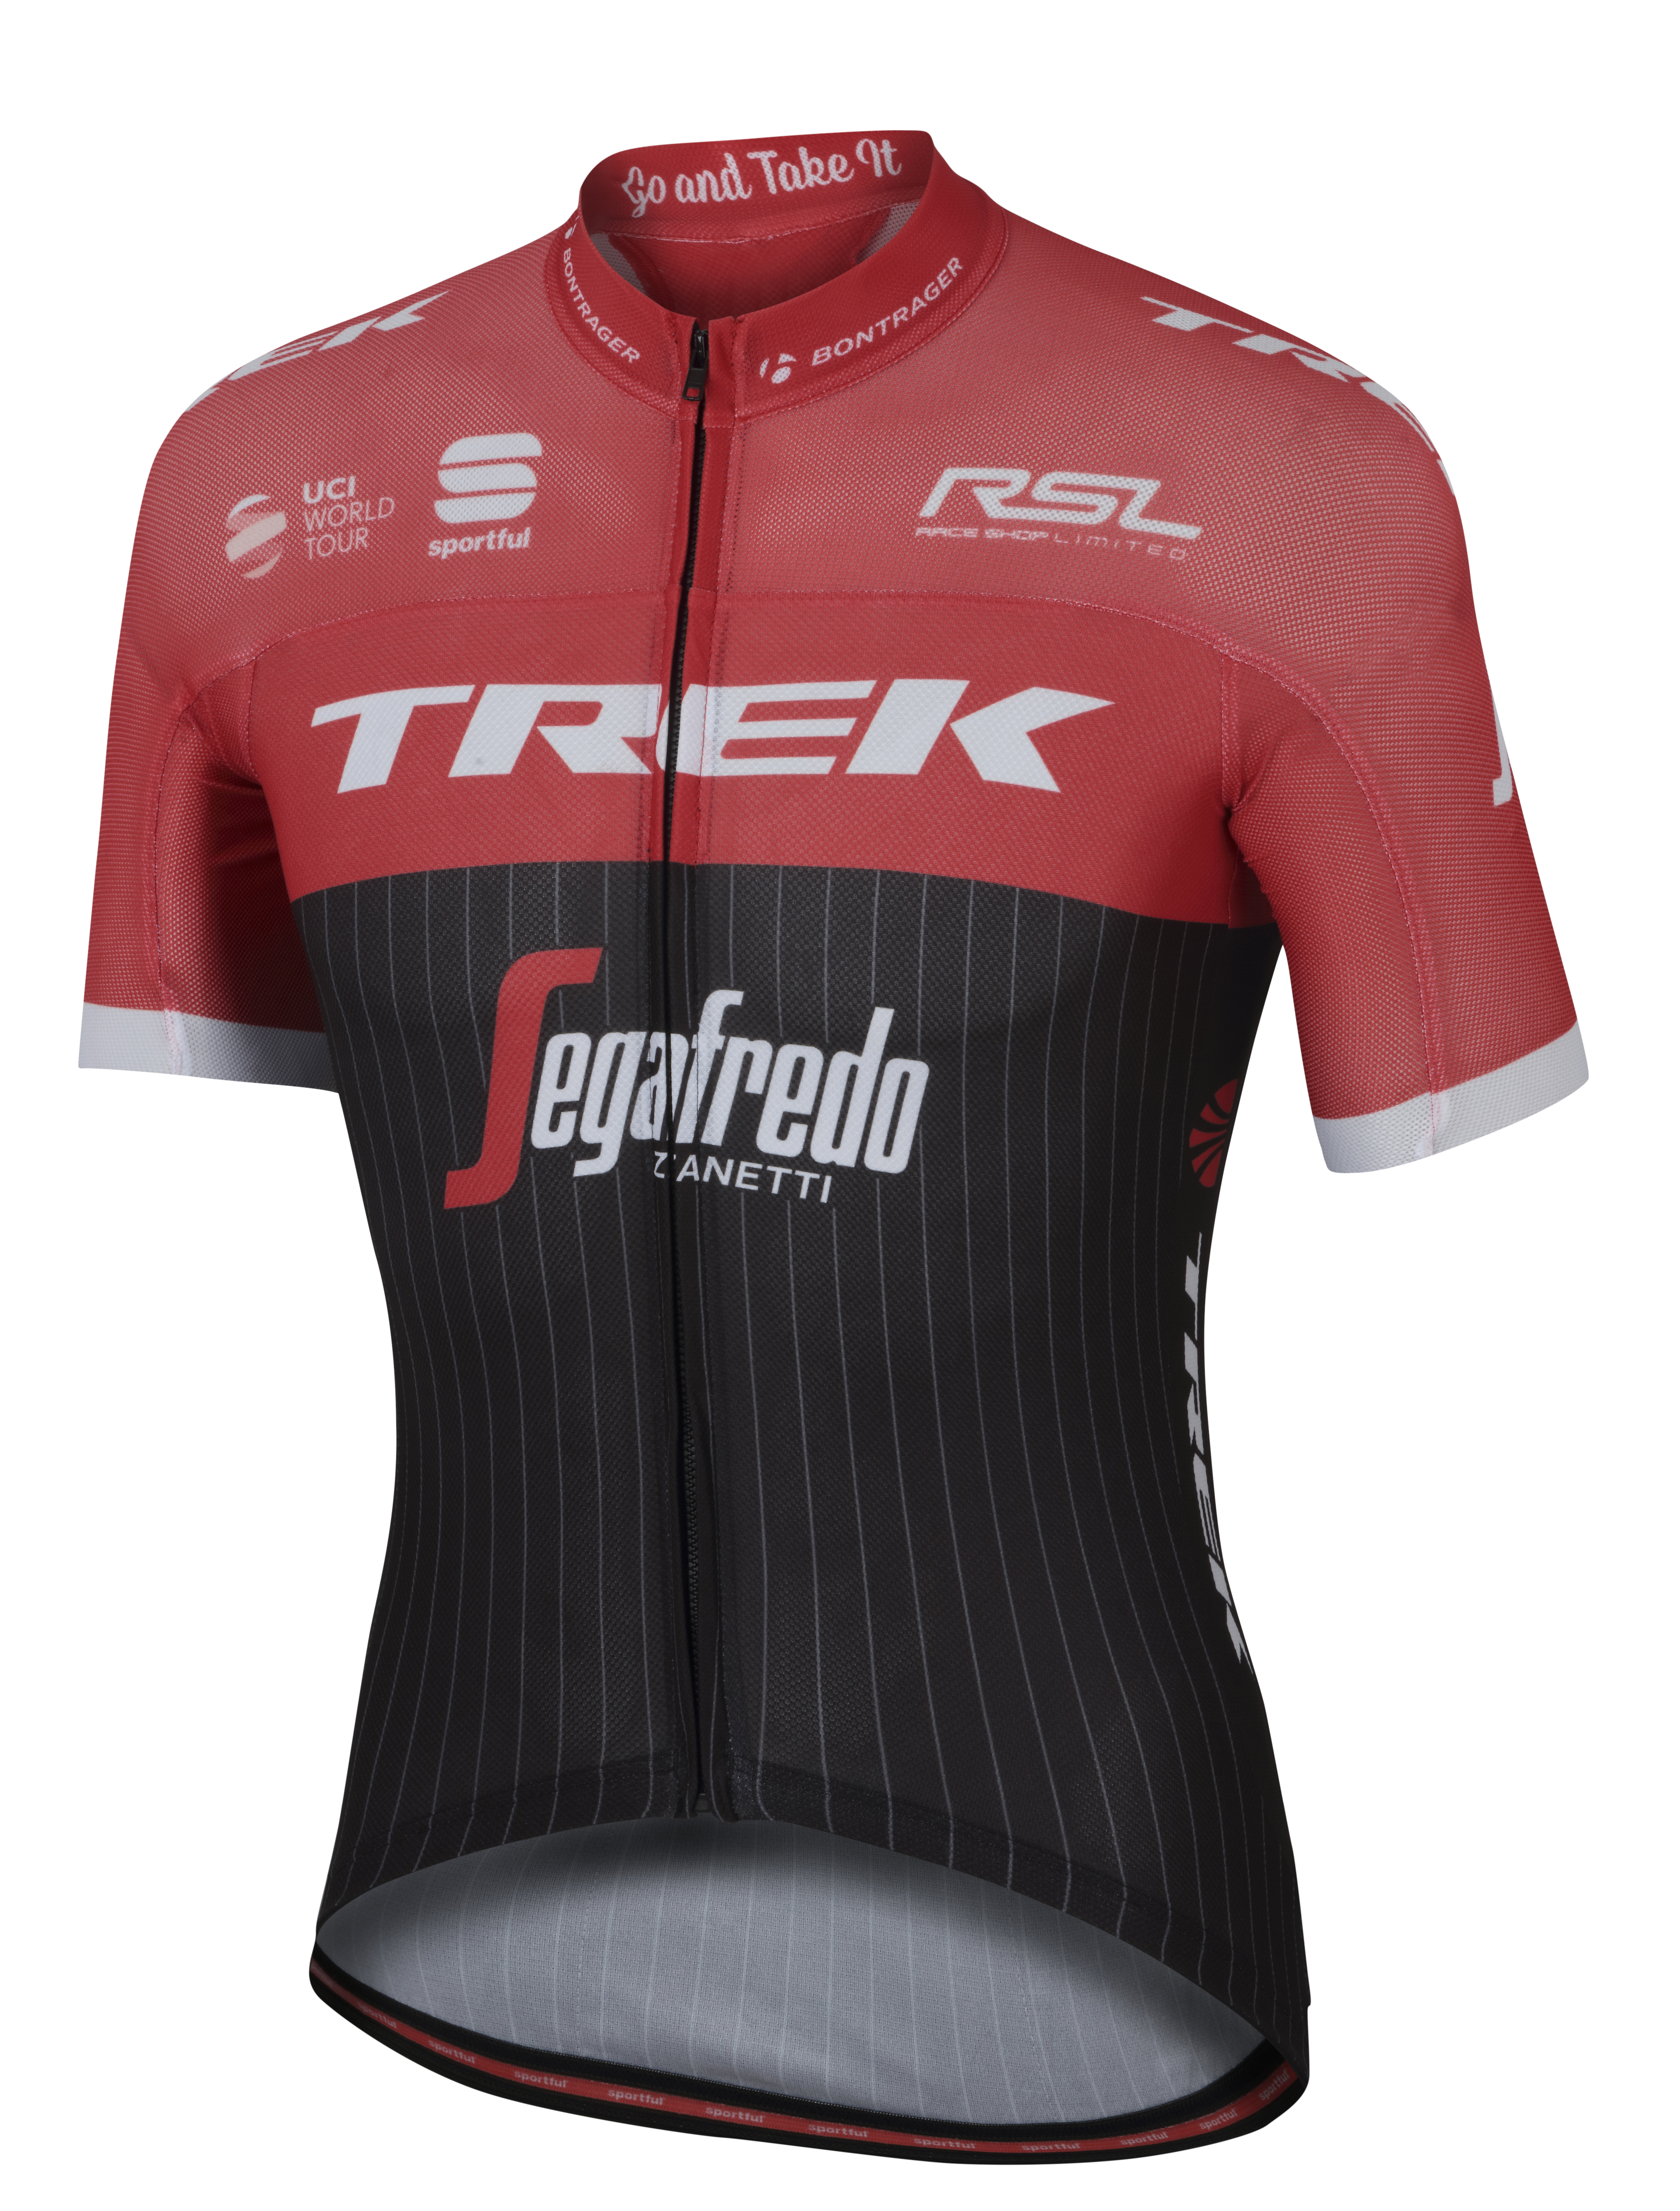 Trek-Segafredo unveil their 2017 race kit | The Bike First